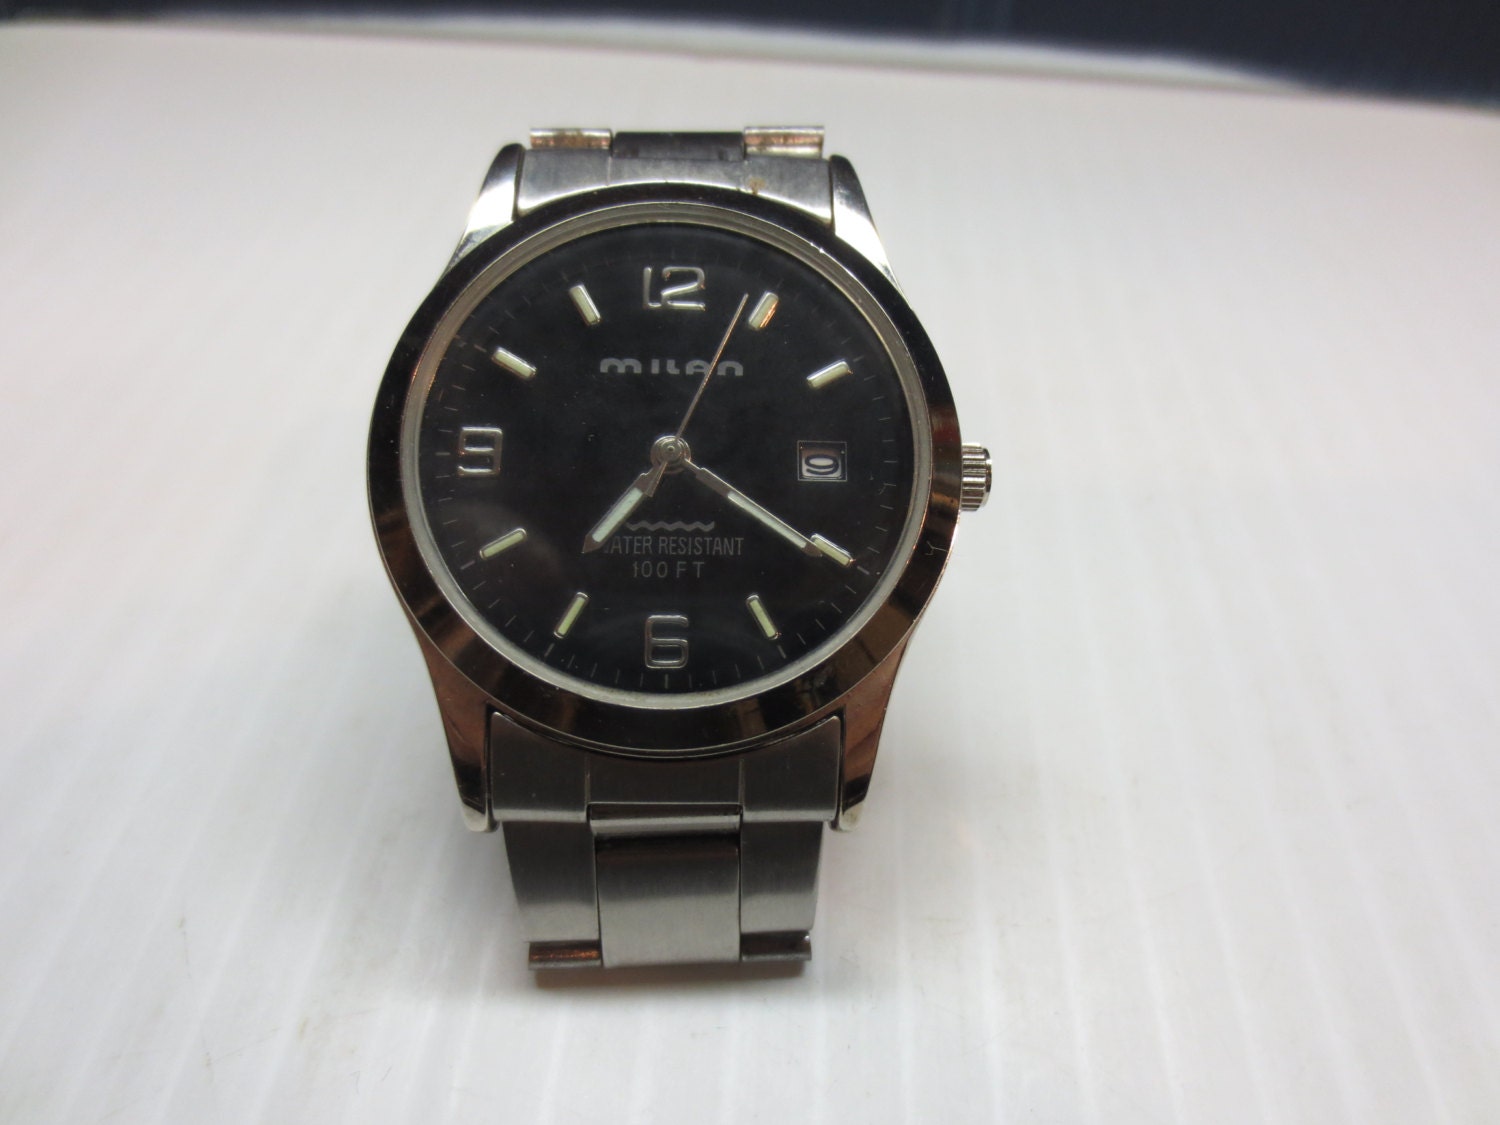 Milan Men's Watch Wrist watch Date Water Resistant Works